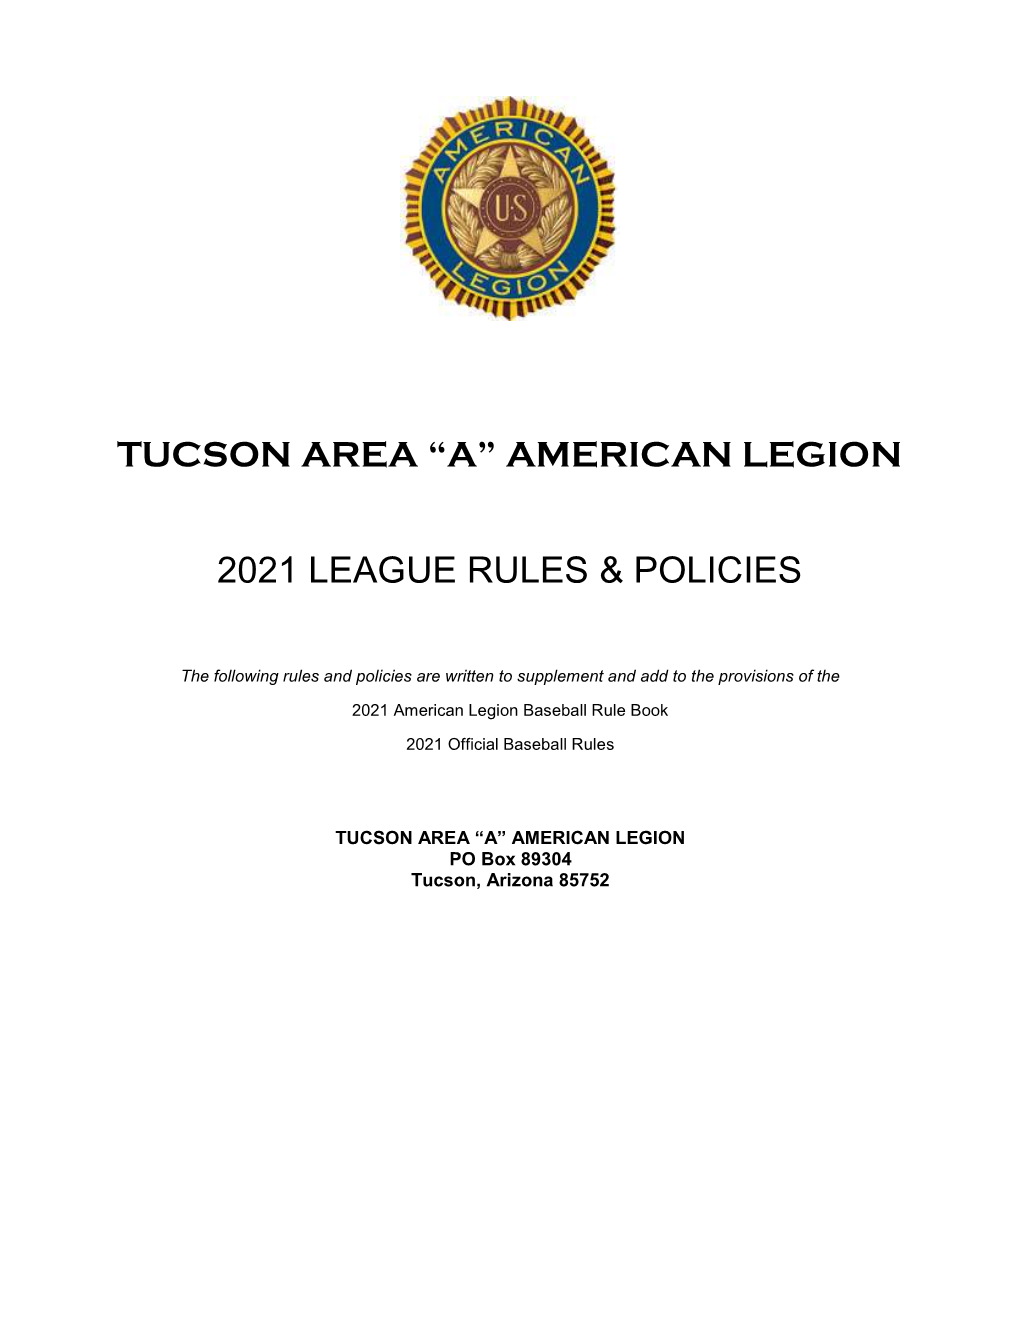 American Legion 2021 League Rules & Policies